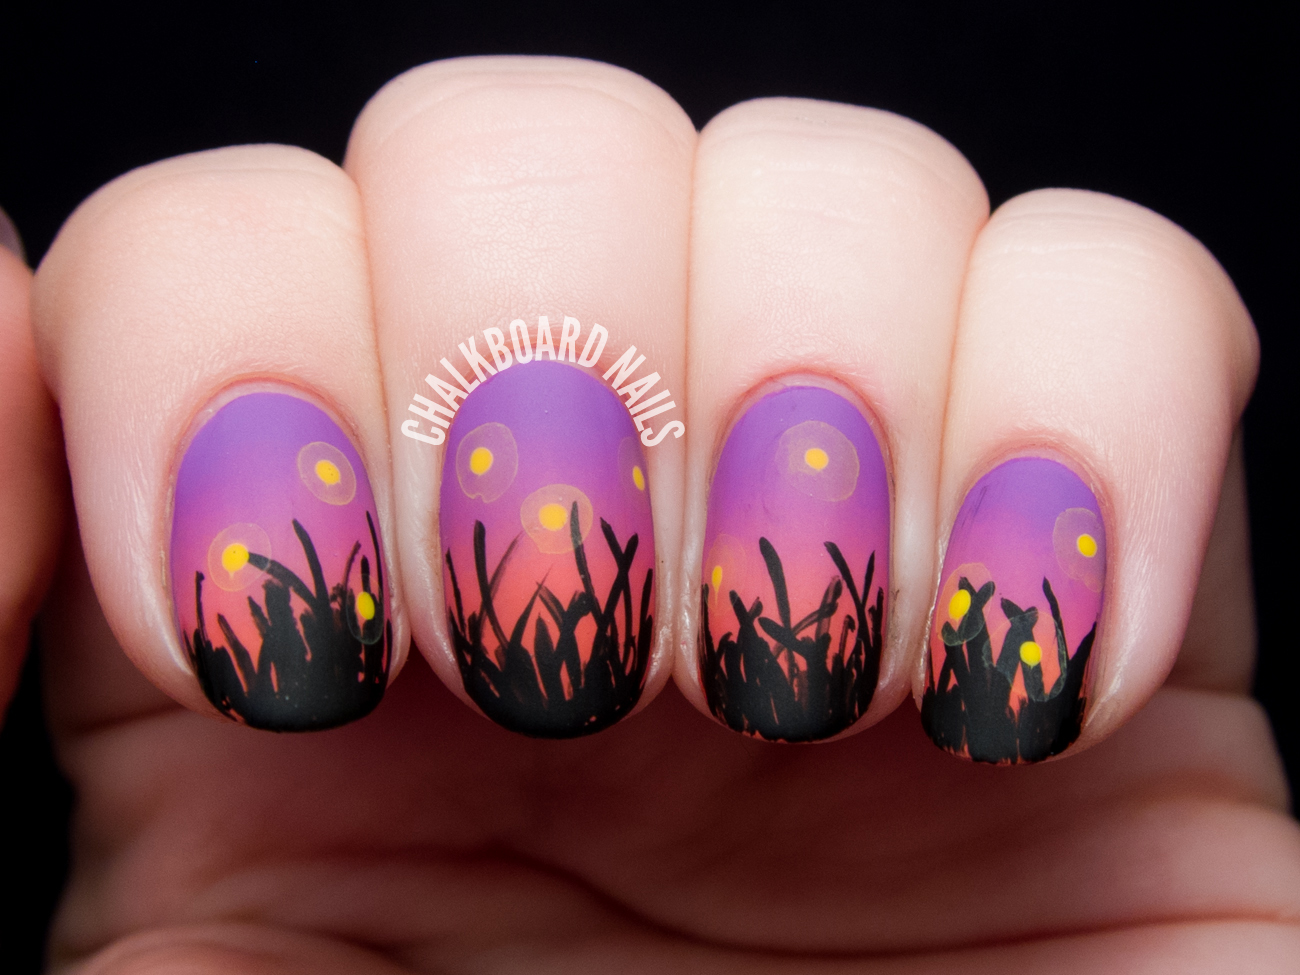 Fireflies at Sunset nail art by @chalkboardnails